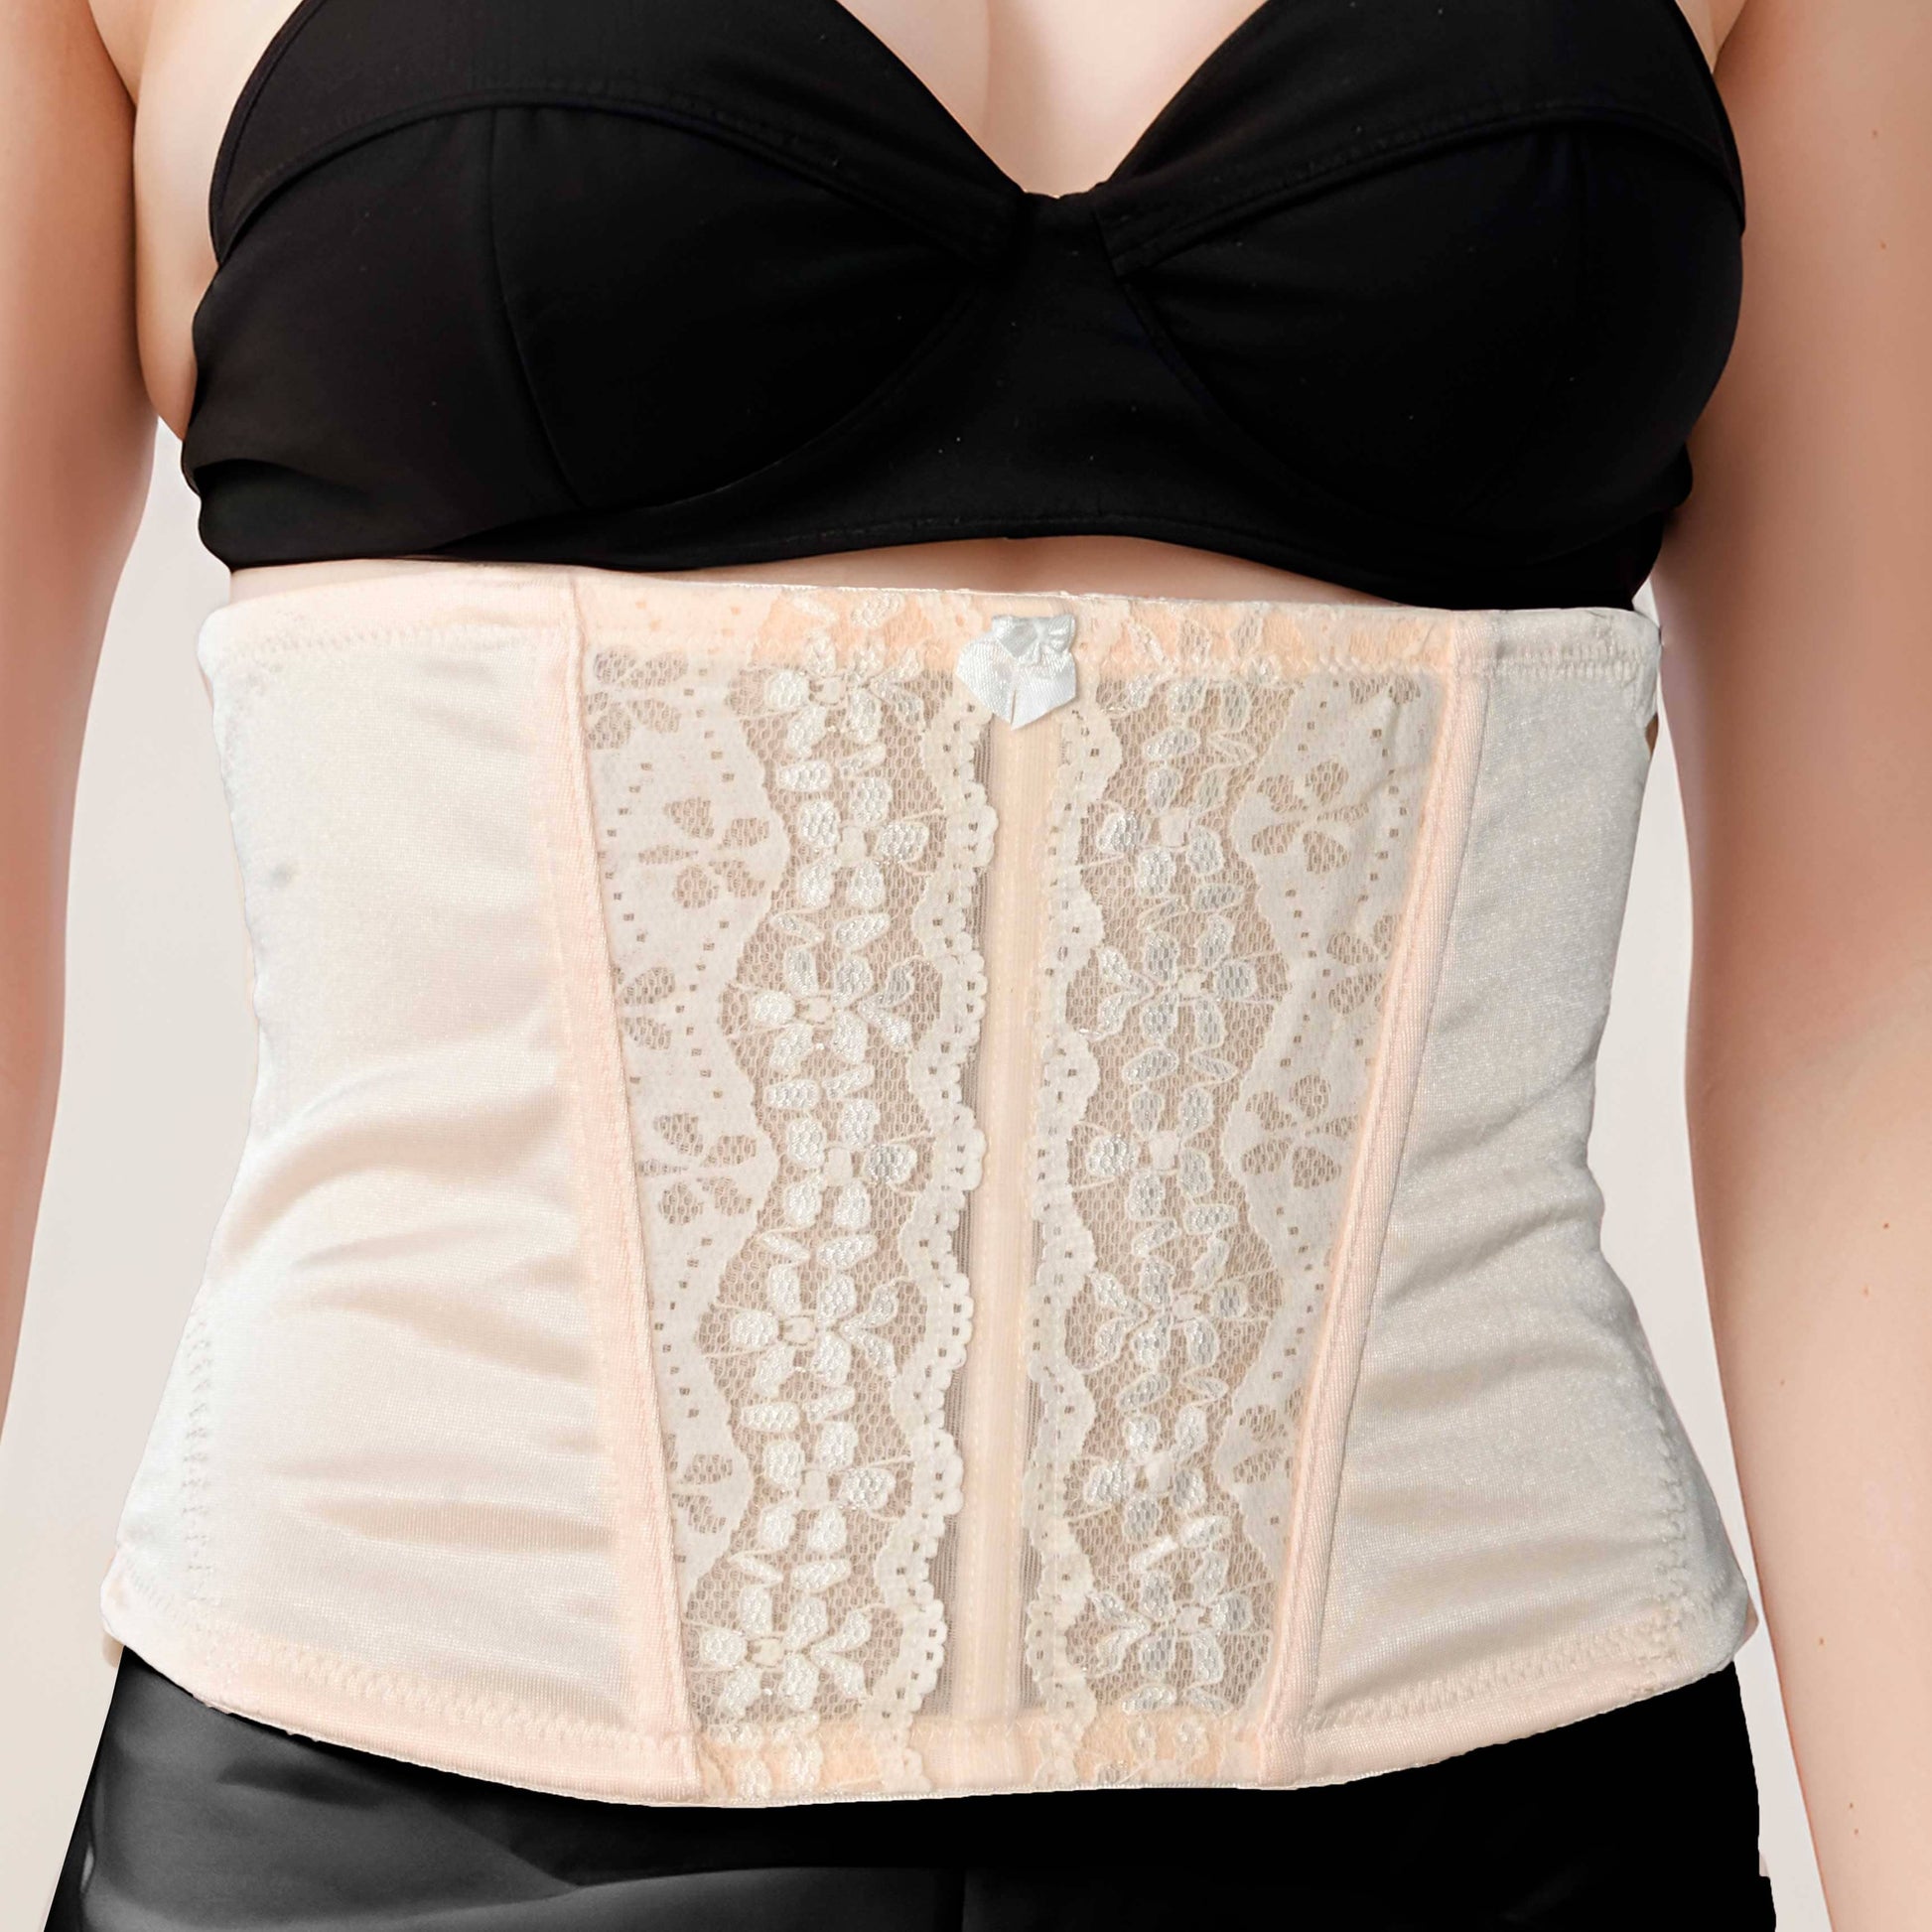 Women's Body Shaper Tummy Control Waist Belt Women's Lingerie CPUS 